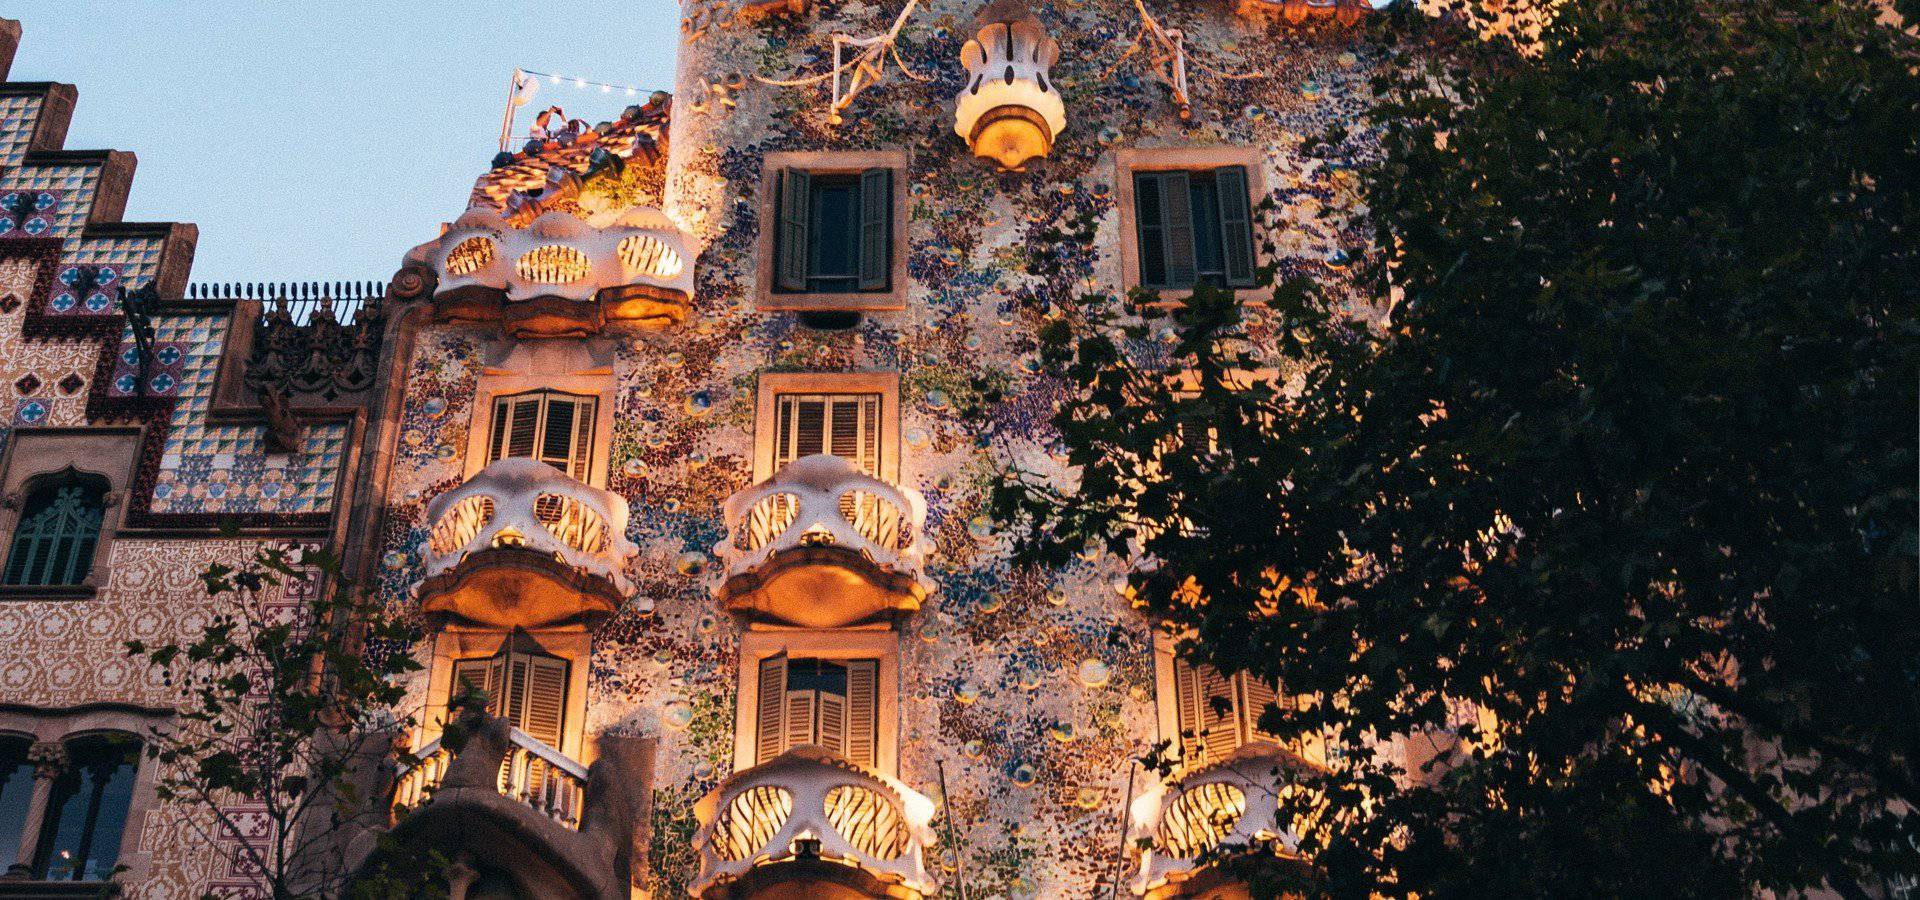 Casa Batlló Sunotel